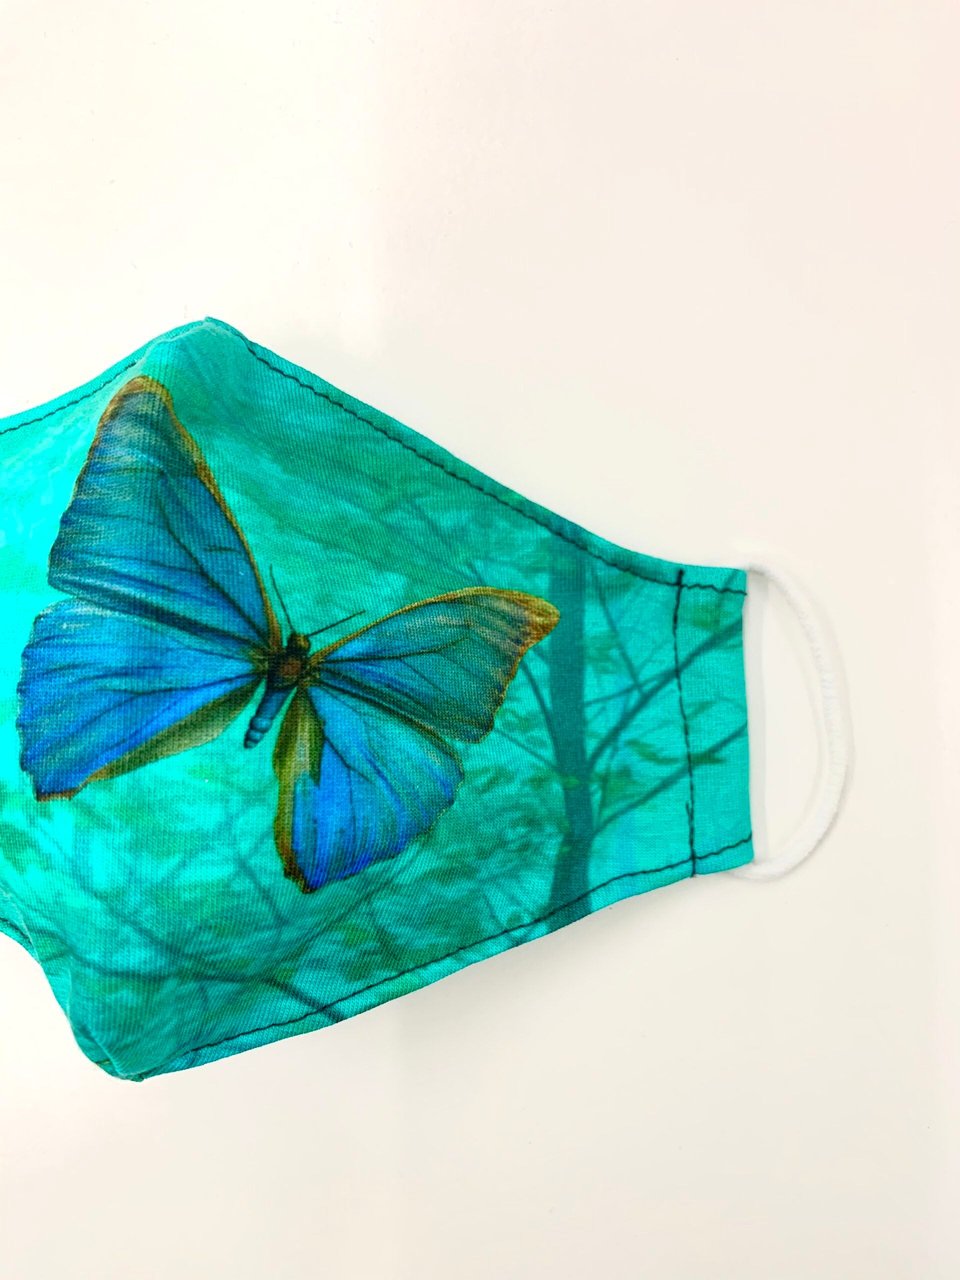 Blue Butterfly Mask